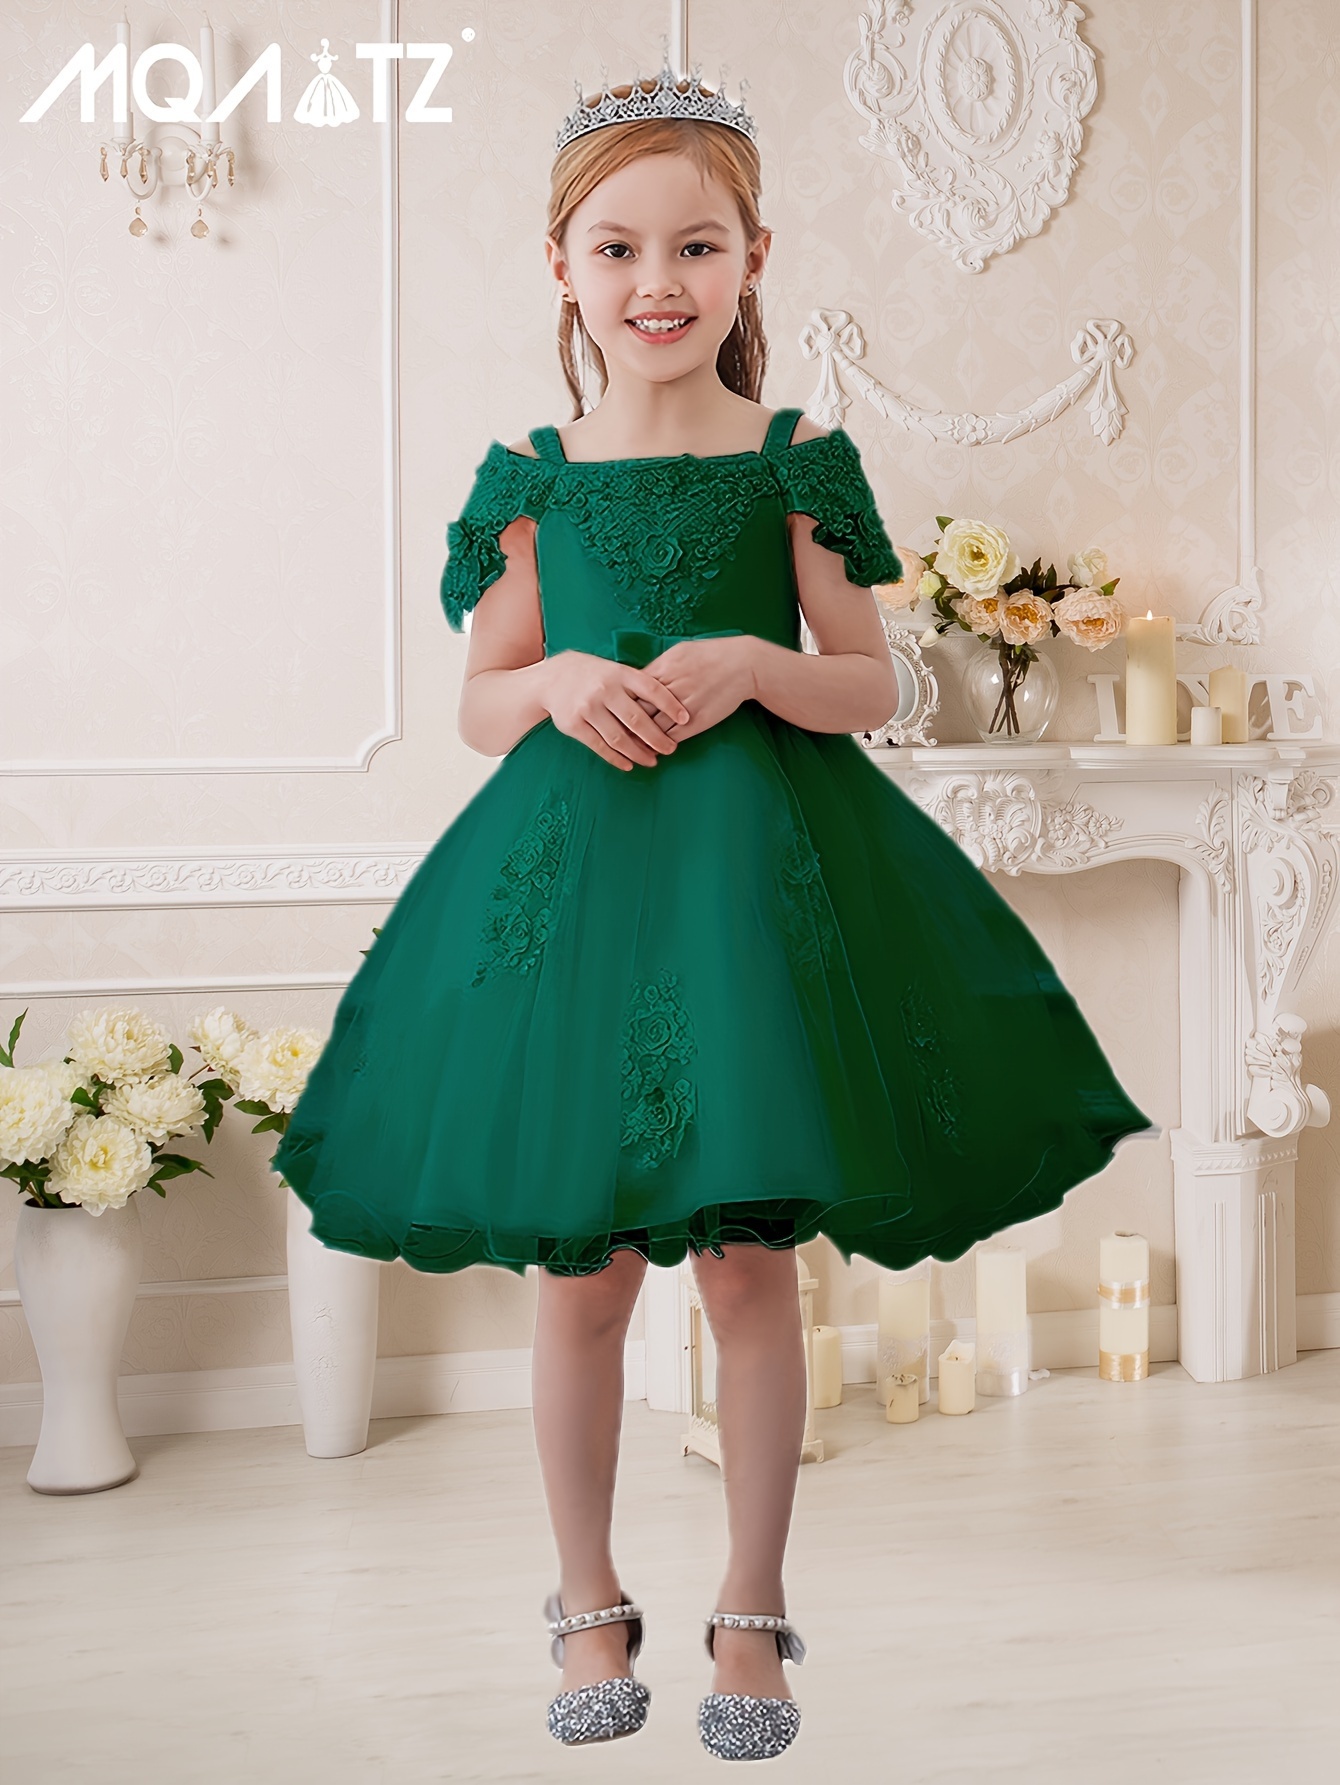 36 Best Princess dresses for kids ideas  flower girl dresses, girls dresses,  pageant dresses